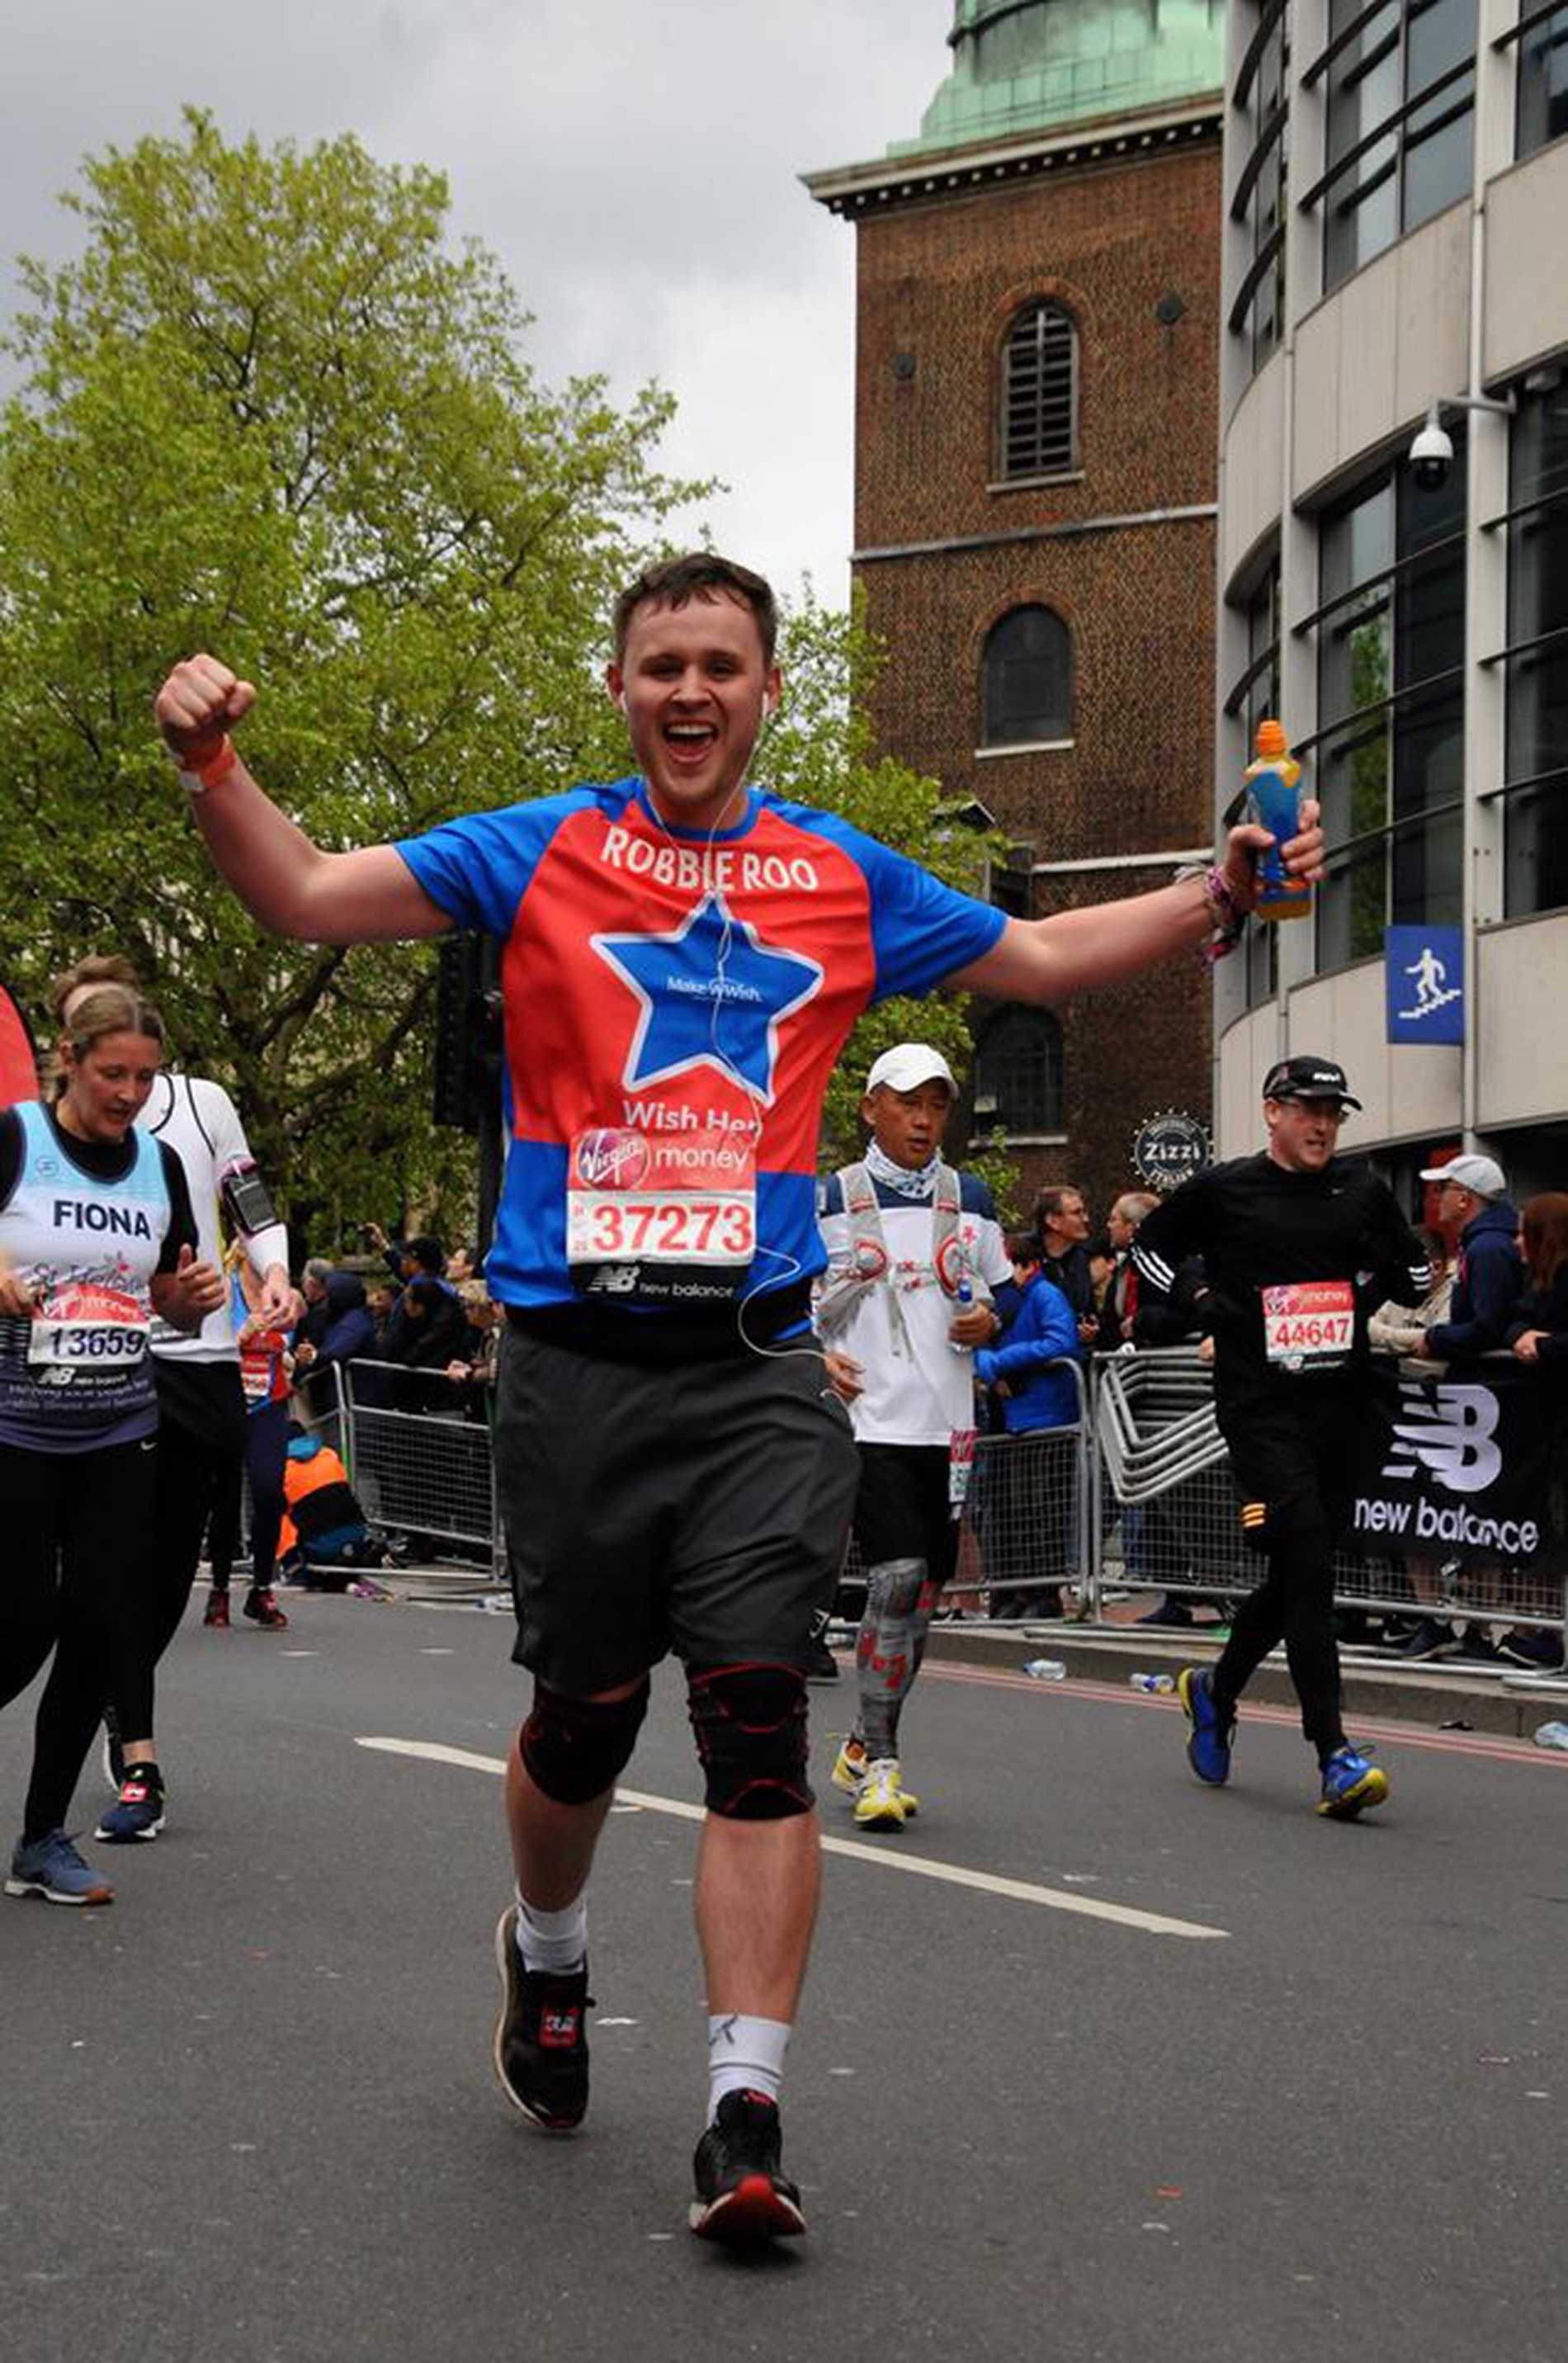 A male Make-A-Wish #WishHero taking part in the 2019 London Marathon.